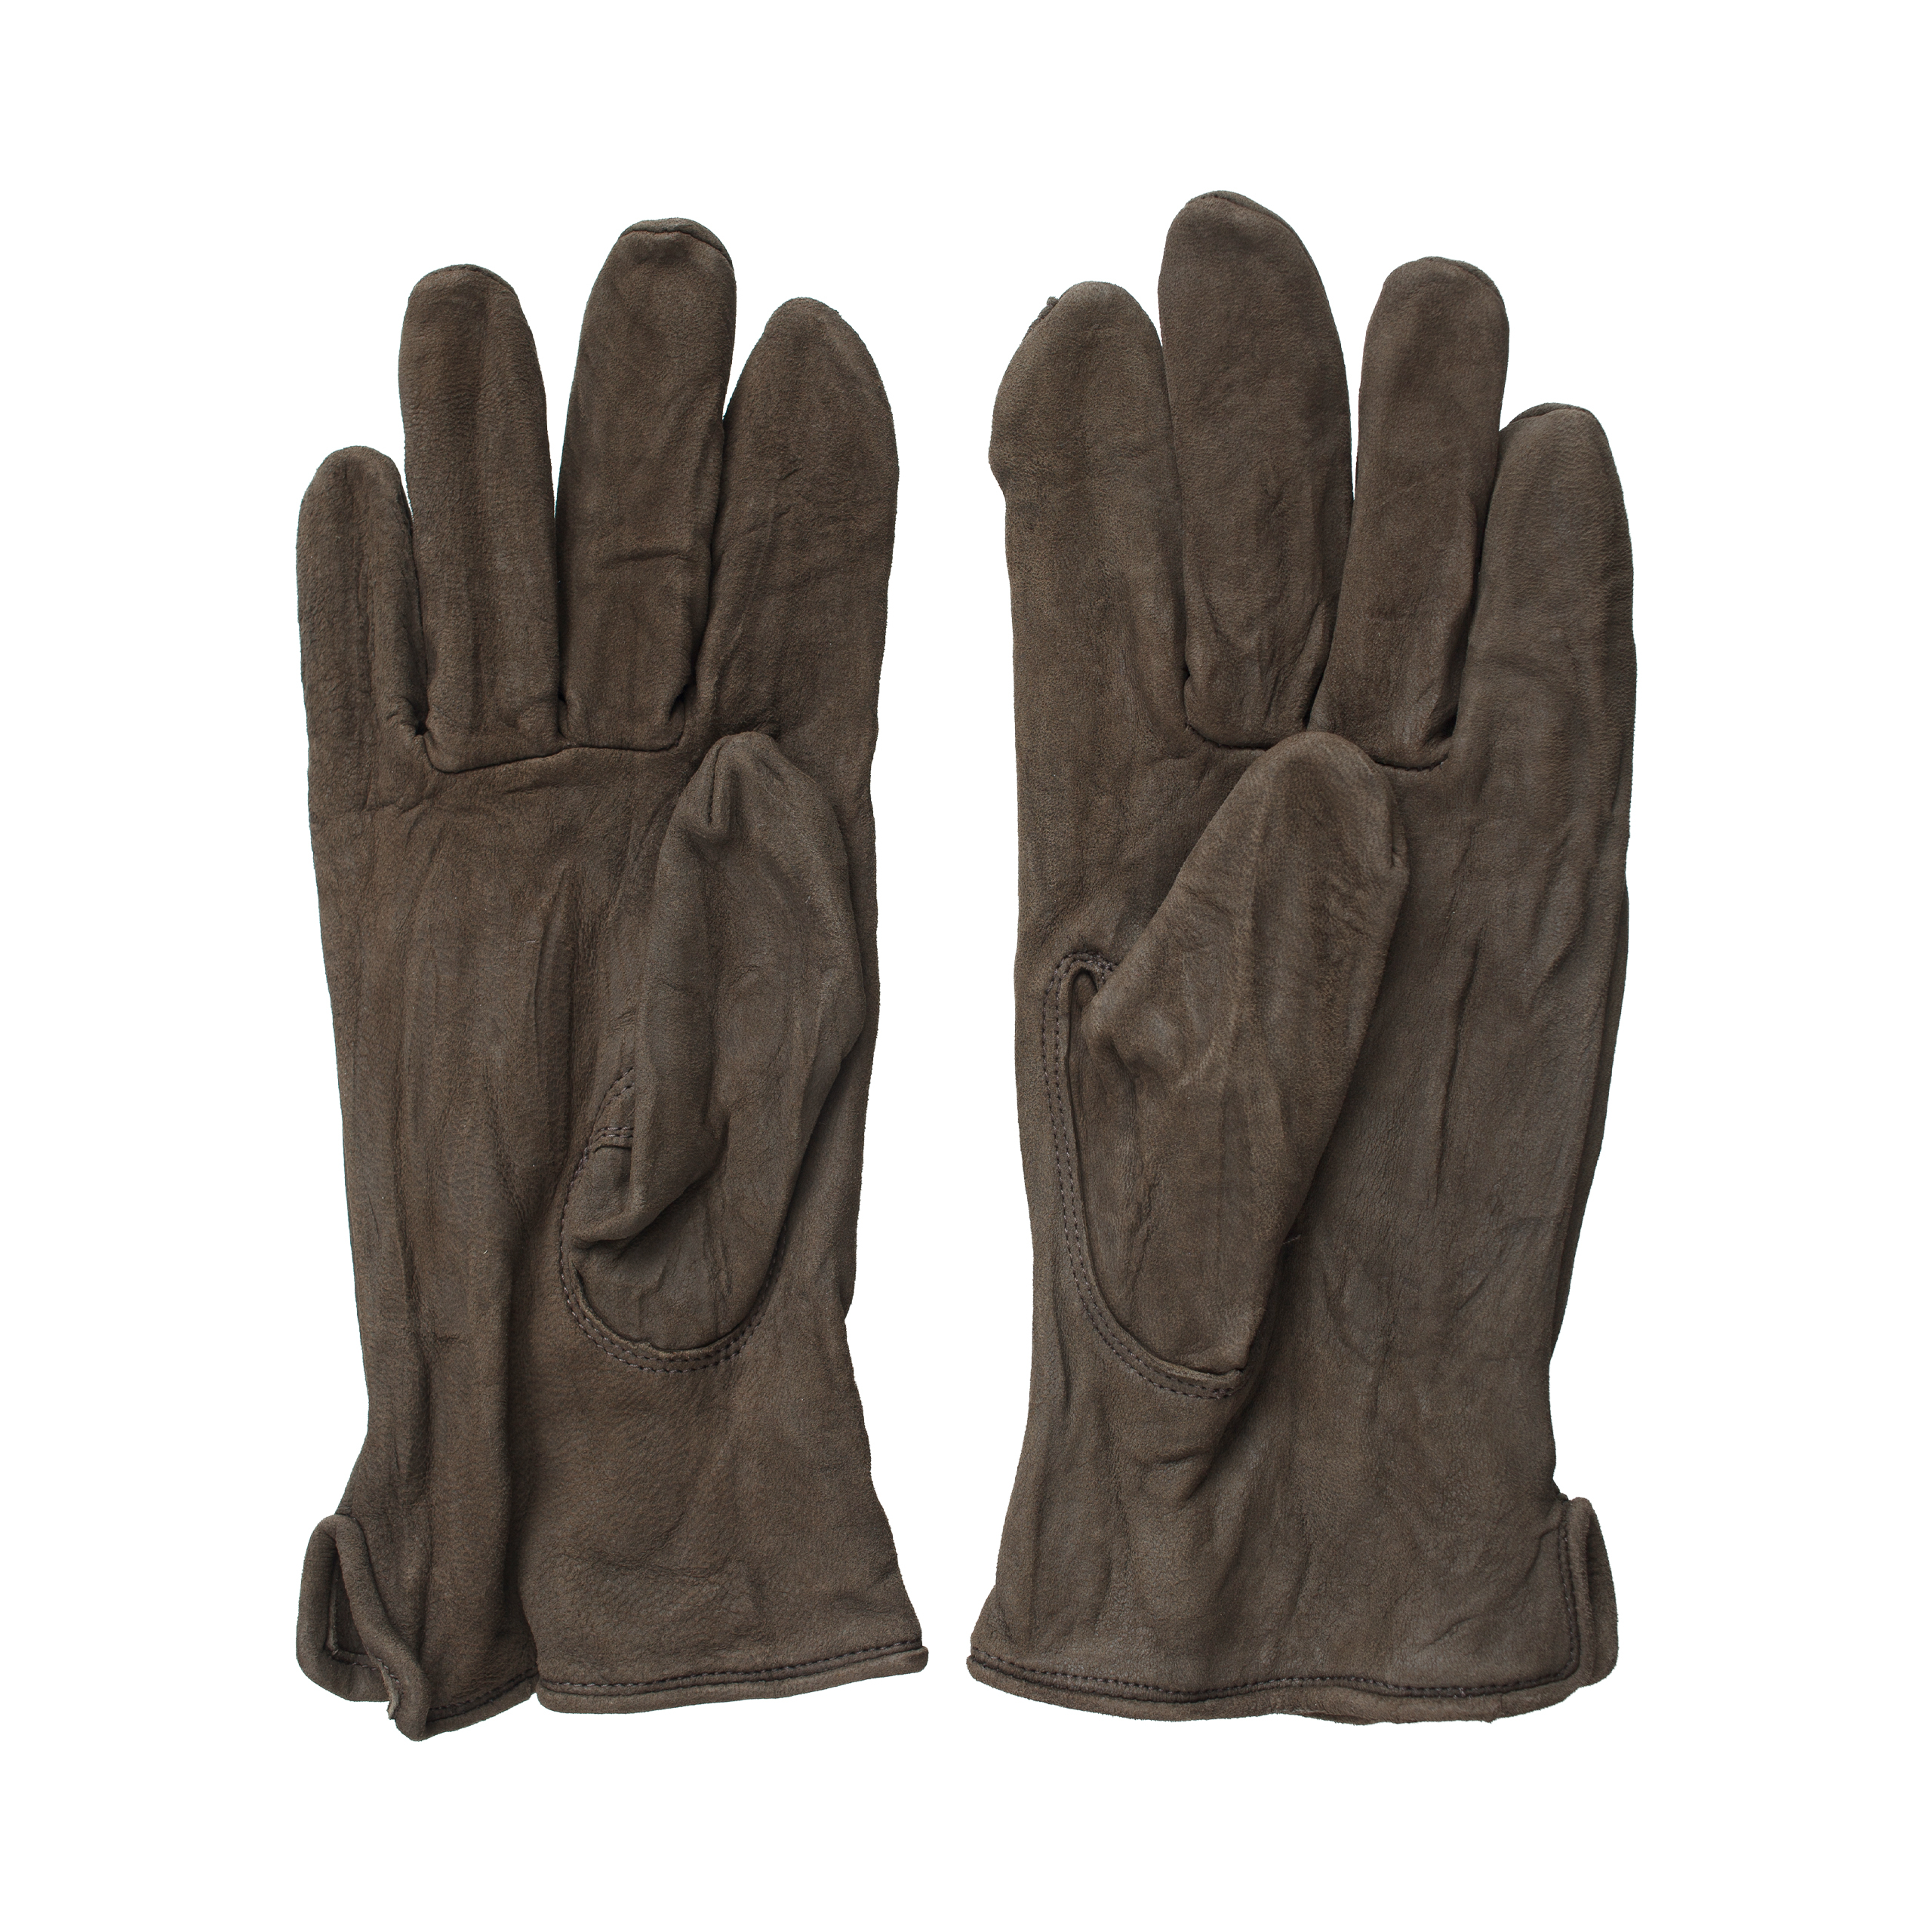 Коричневые замшевые перчатки visvim 0123203003008/DK.BROWN, размер M/L 0123203003008/DK.BROWN - фото 3